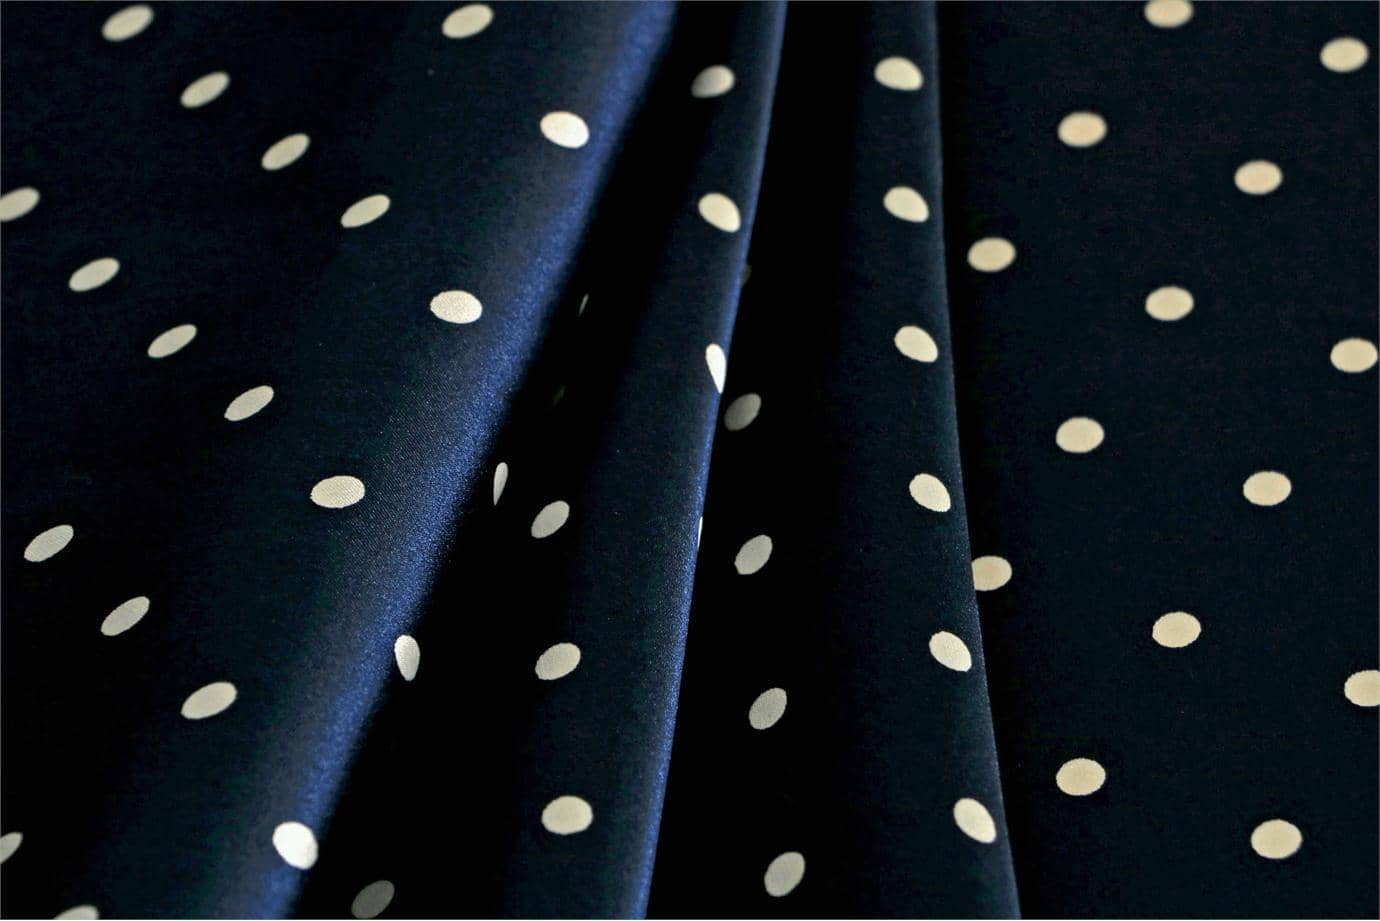 Blue, White Silk Satin Polka Dot Fabric - Raso Se Omnibus Pois 201102